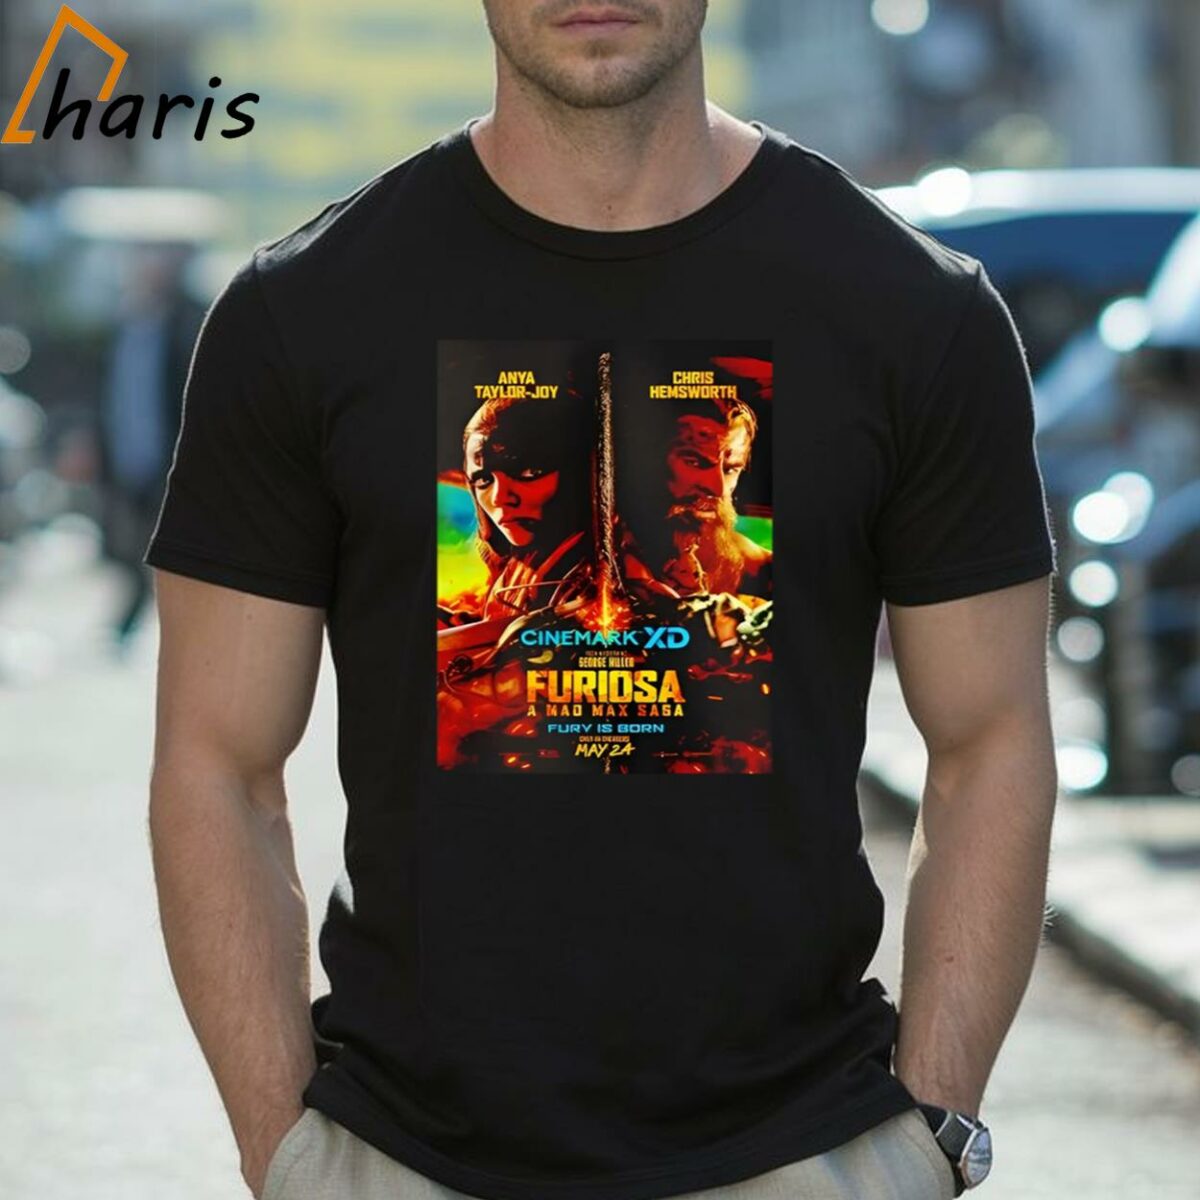 New Cinemark Xd For Furiosa A Mad Max Saga Poster Shirt 2 Shirt